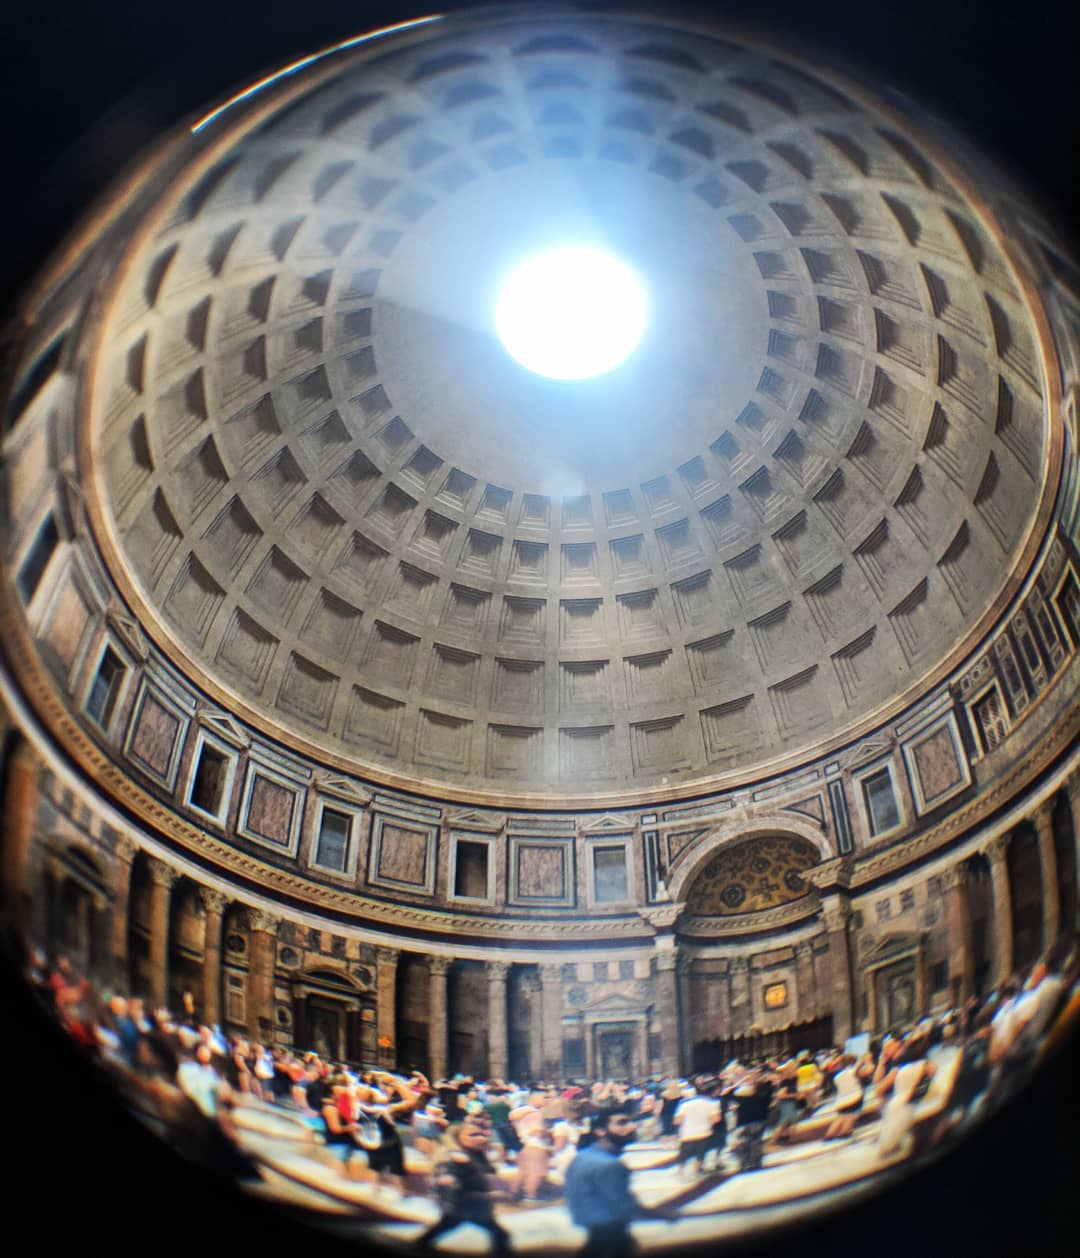 The Pantheon interior